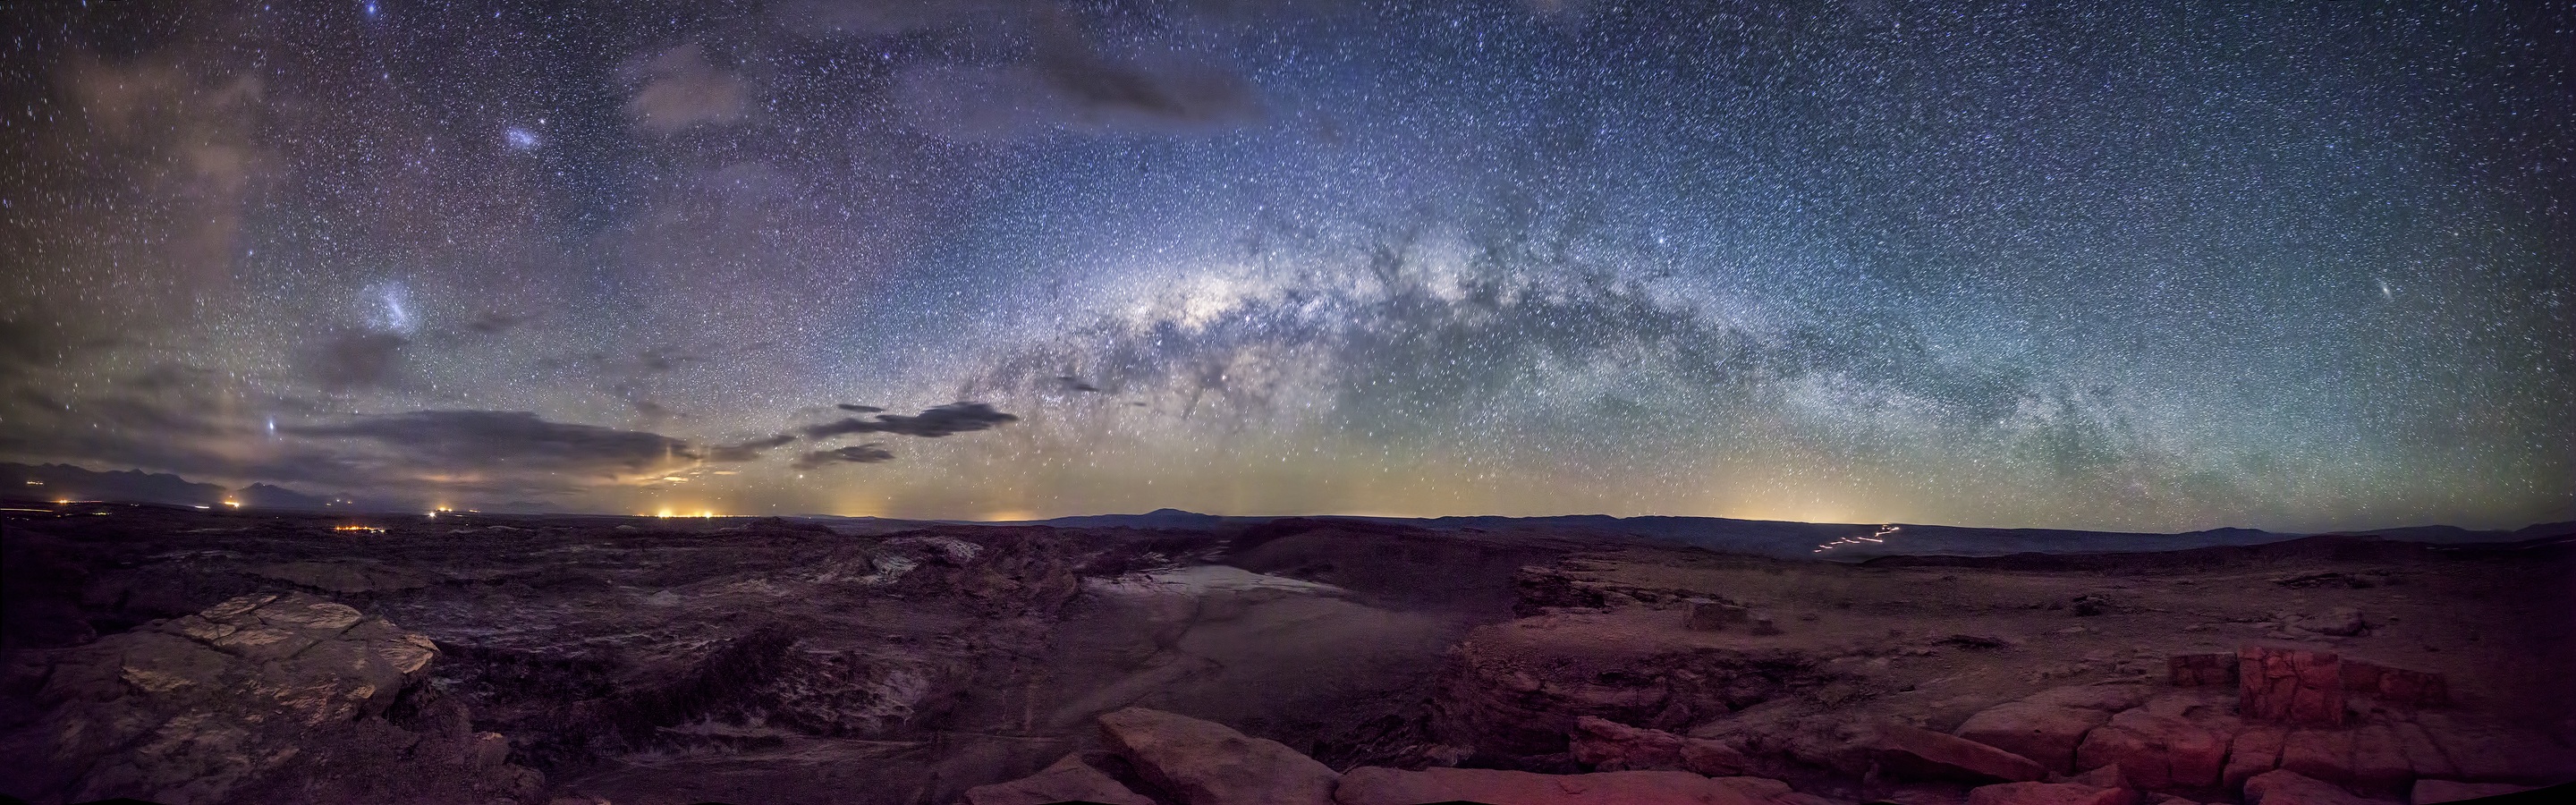 KOSMOS - Milky-Way-over-Moon-Valley-900px-by-Rafael-Defavari.jpg